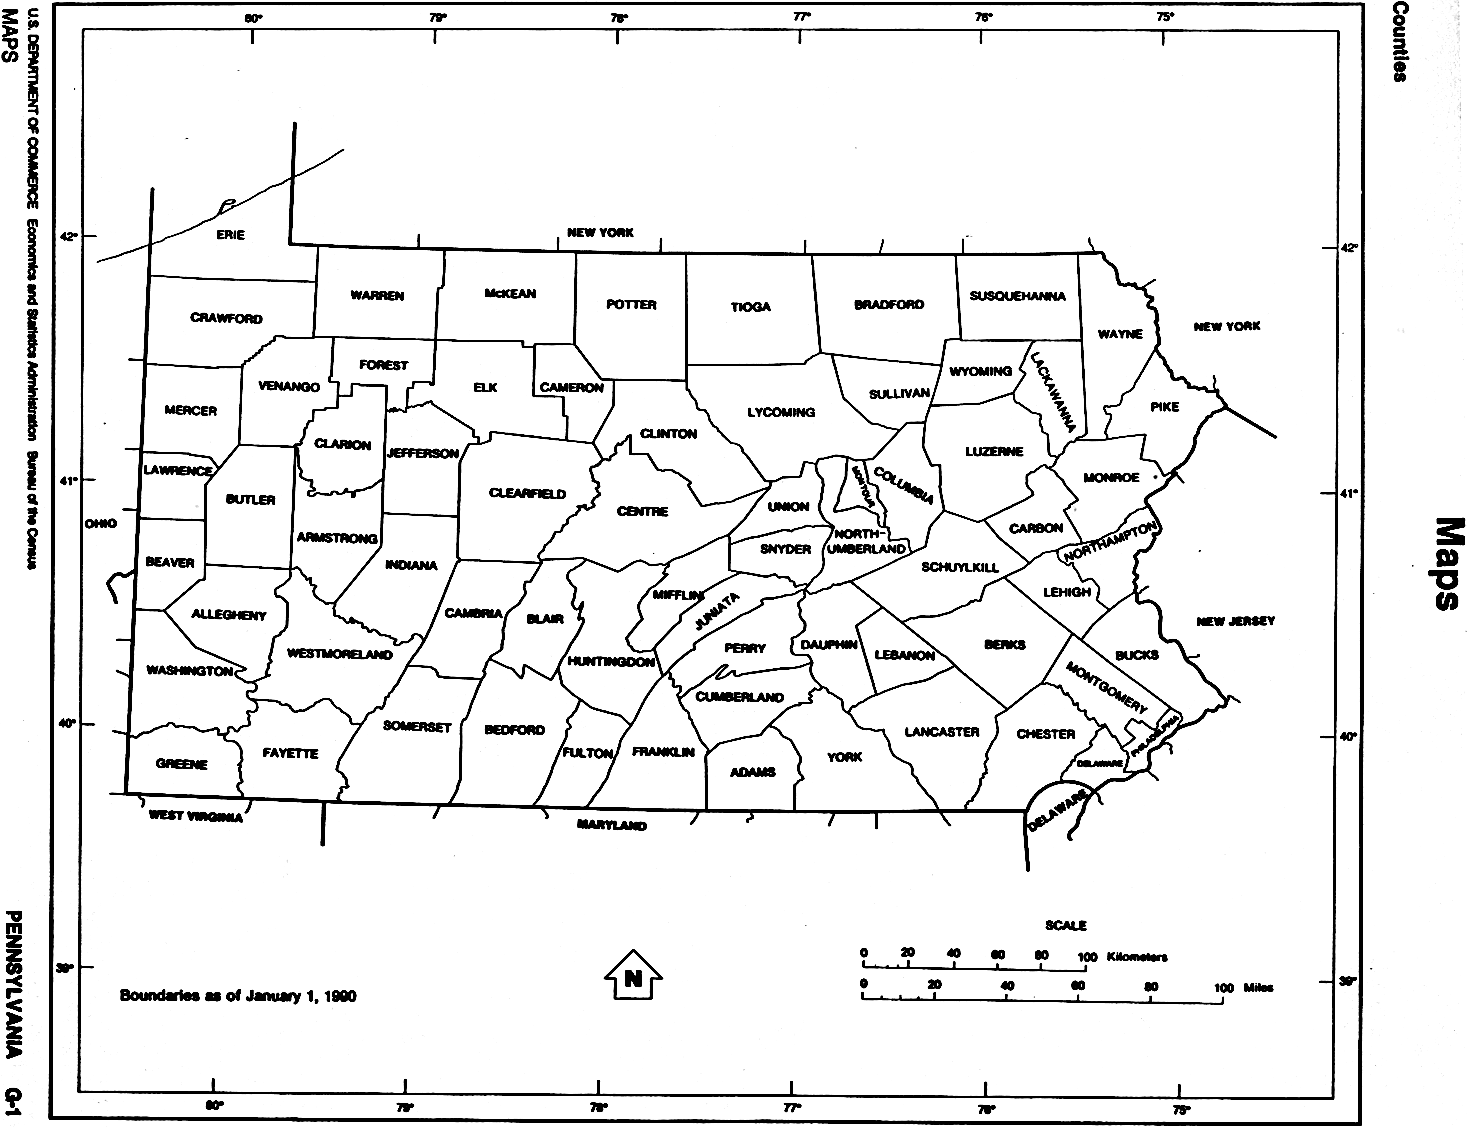 Map Pennsylvania